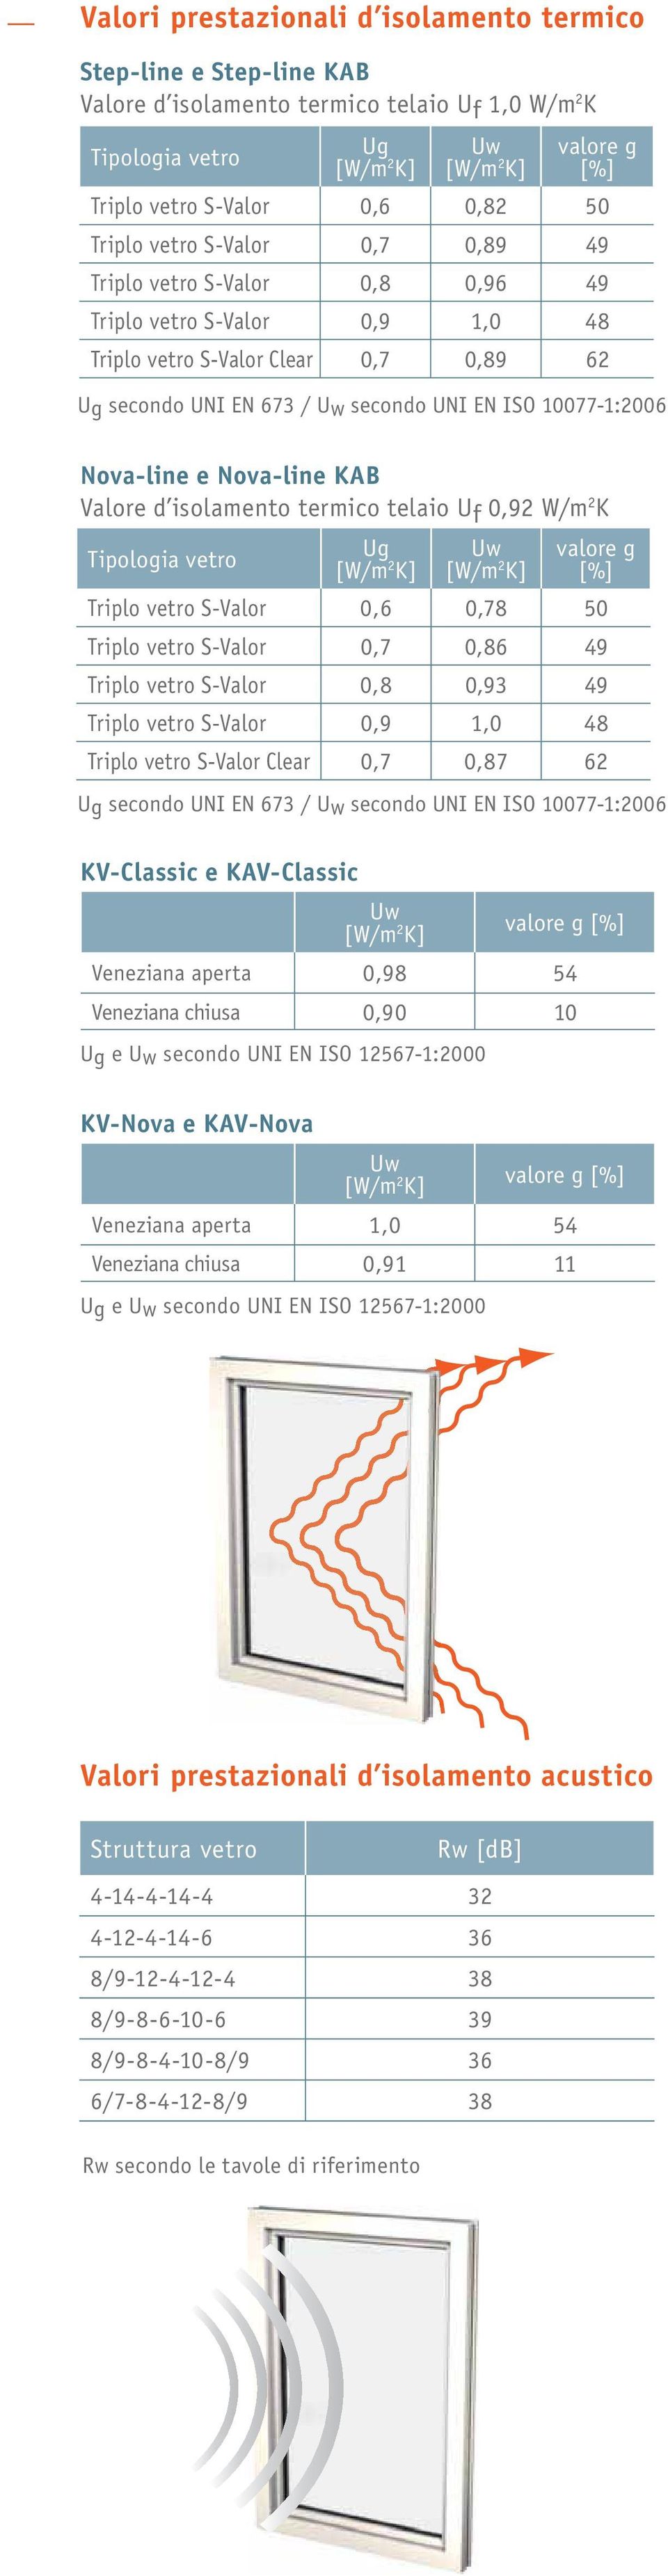 Nova-line KAB Valore d isolamento termico telaio U f 0,92 Tipologia vetro Ug [] Uw [] valore g [%] Triplo vetro S-Valor 0,6 0,78 50 Triplo vetro S-Valor 0,7 0,86 49 Triplo vetro S-Valor 0,8 0,93 49